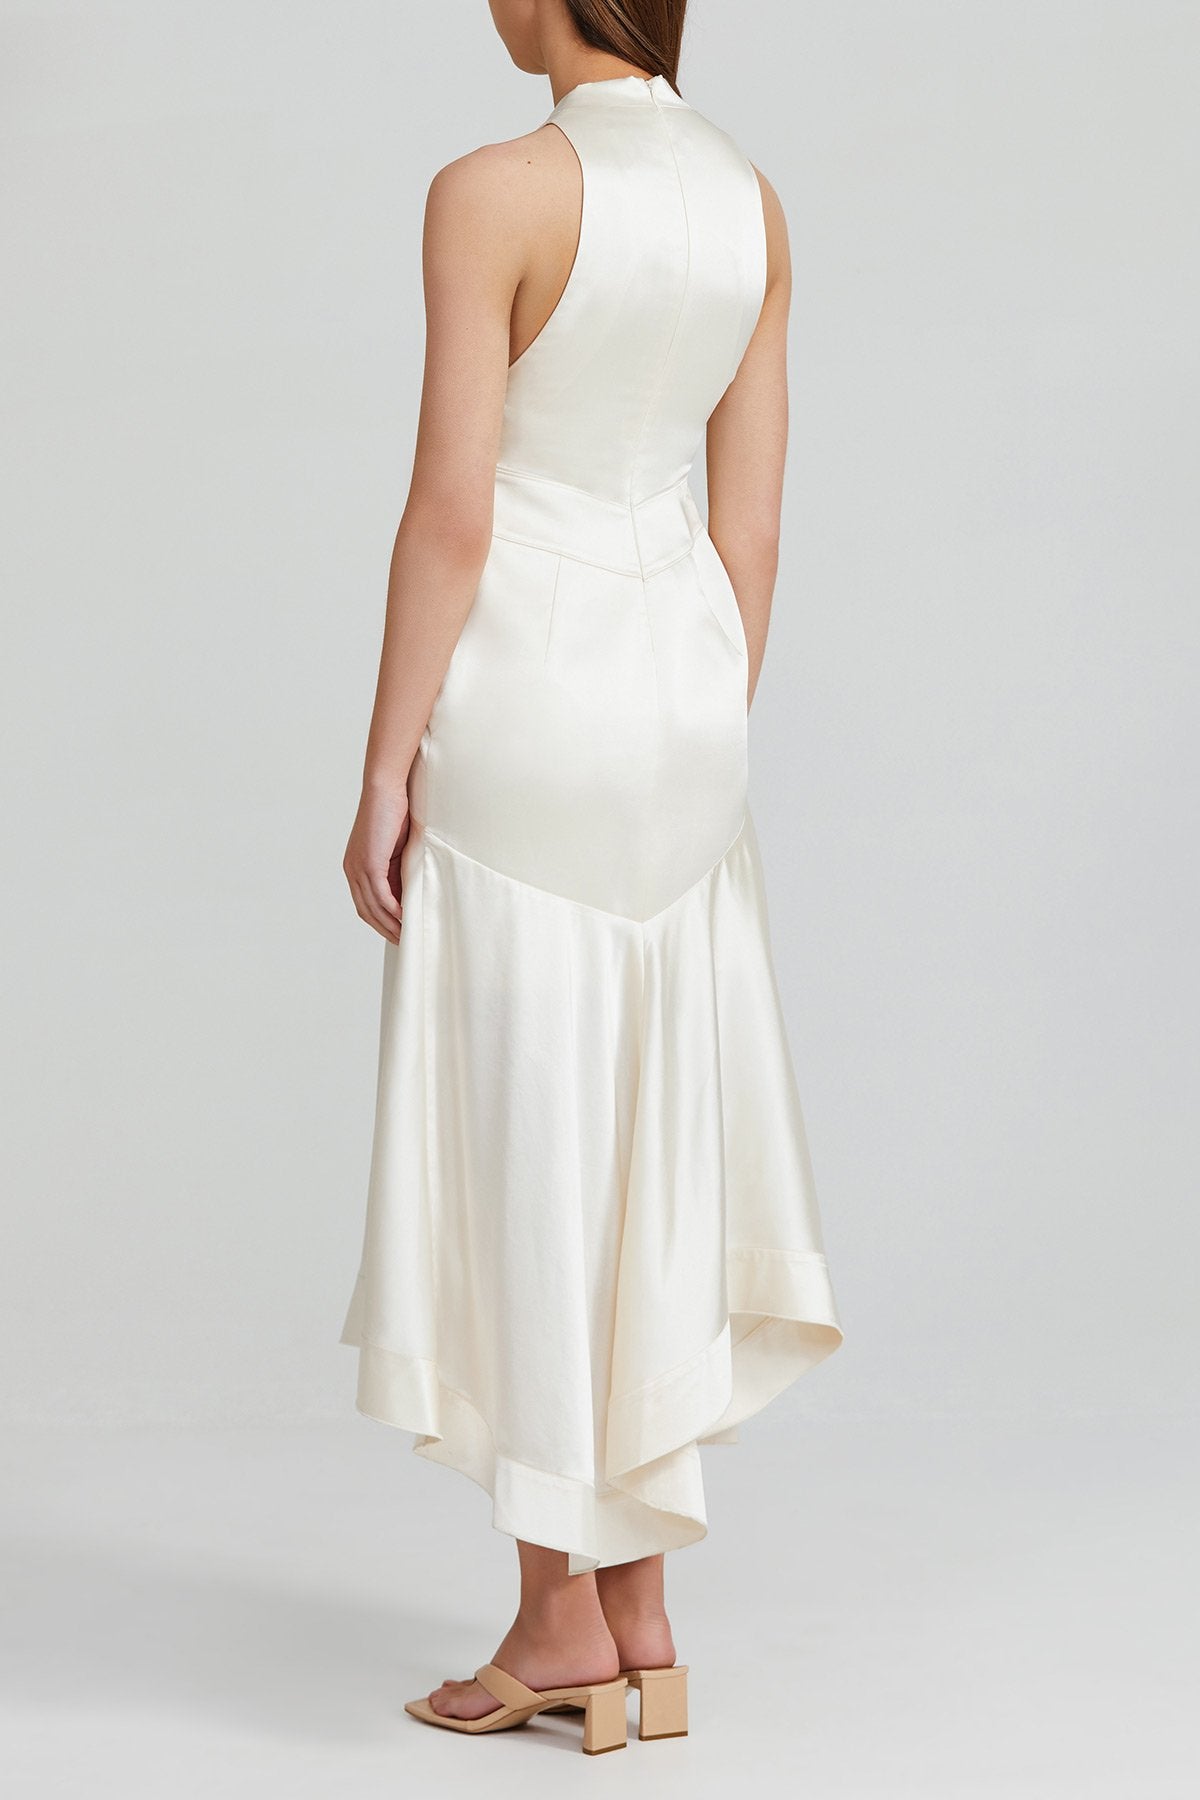 Acler Millbank Dress - Estilo Boutique